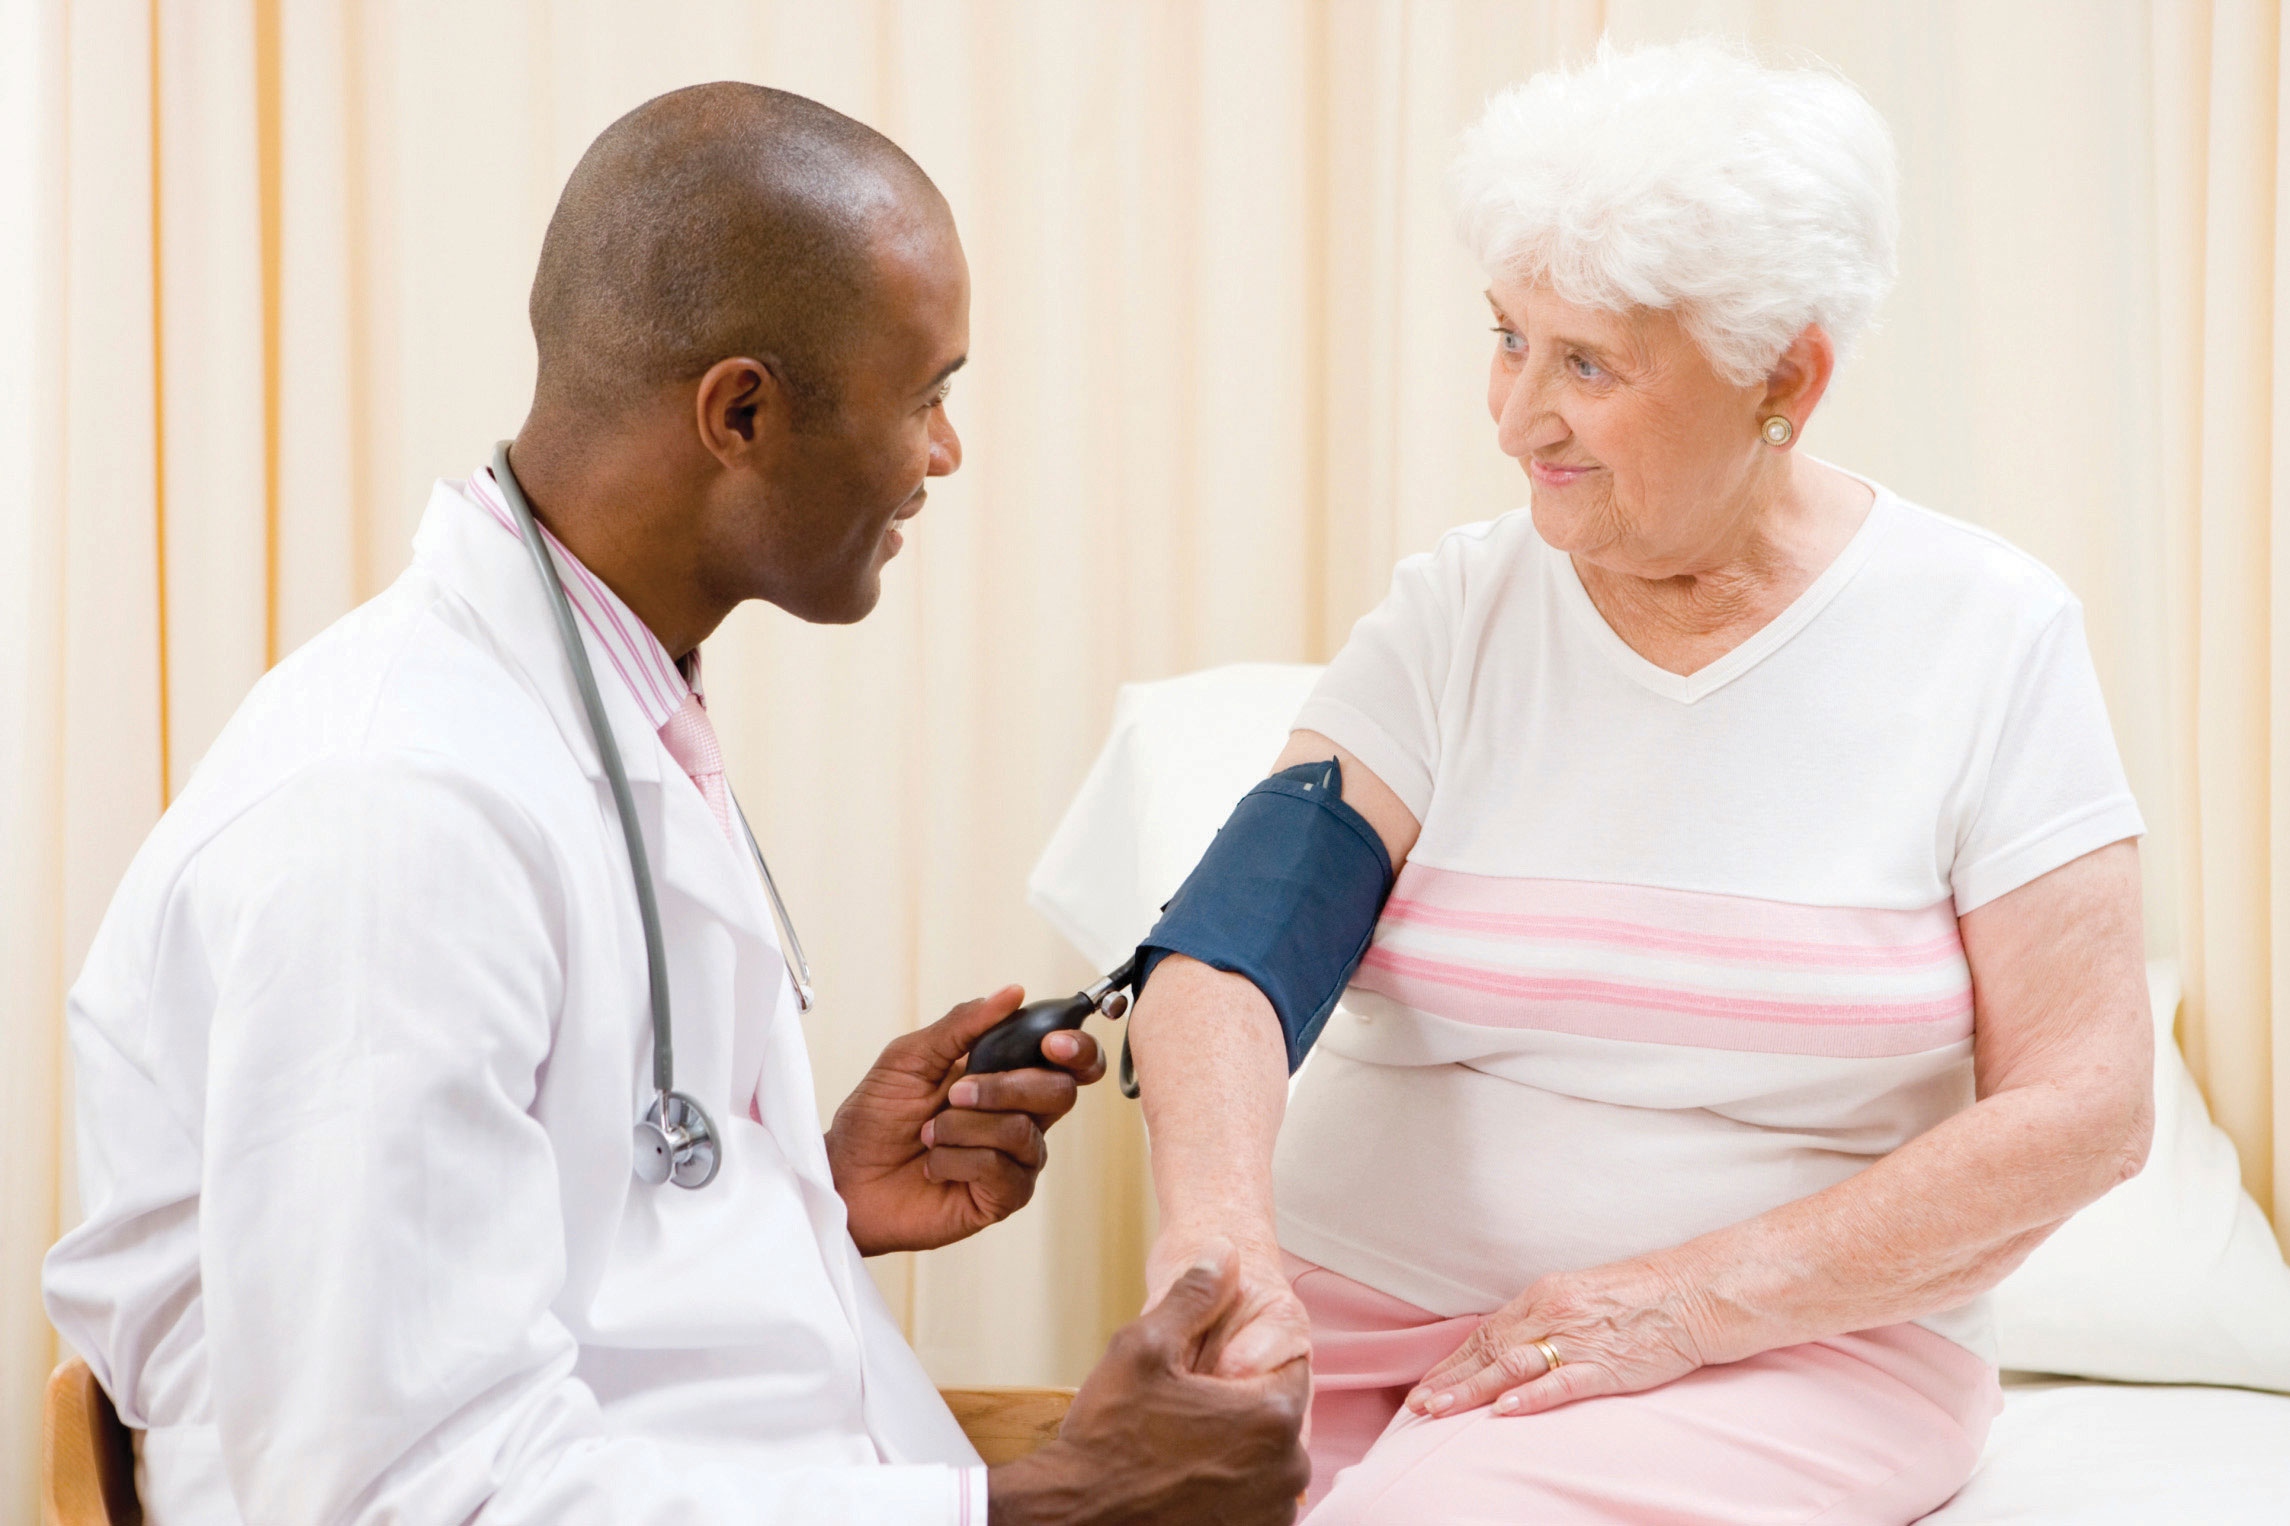 Problems for Nursing Homes: Elderly Elopement and 